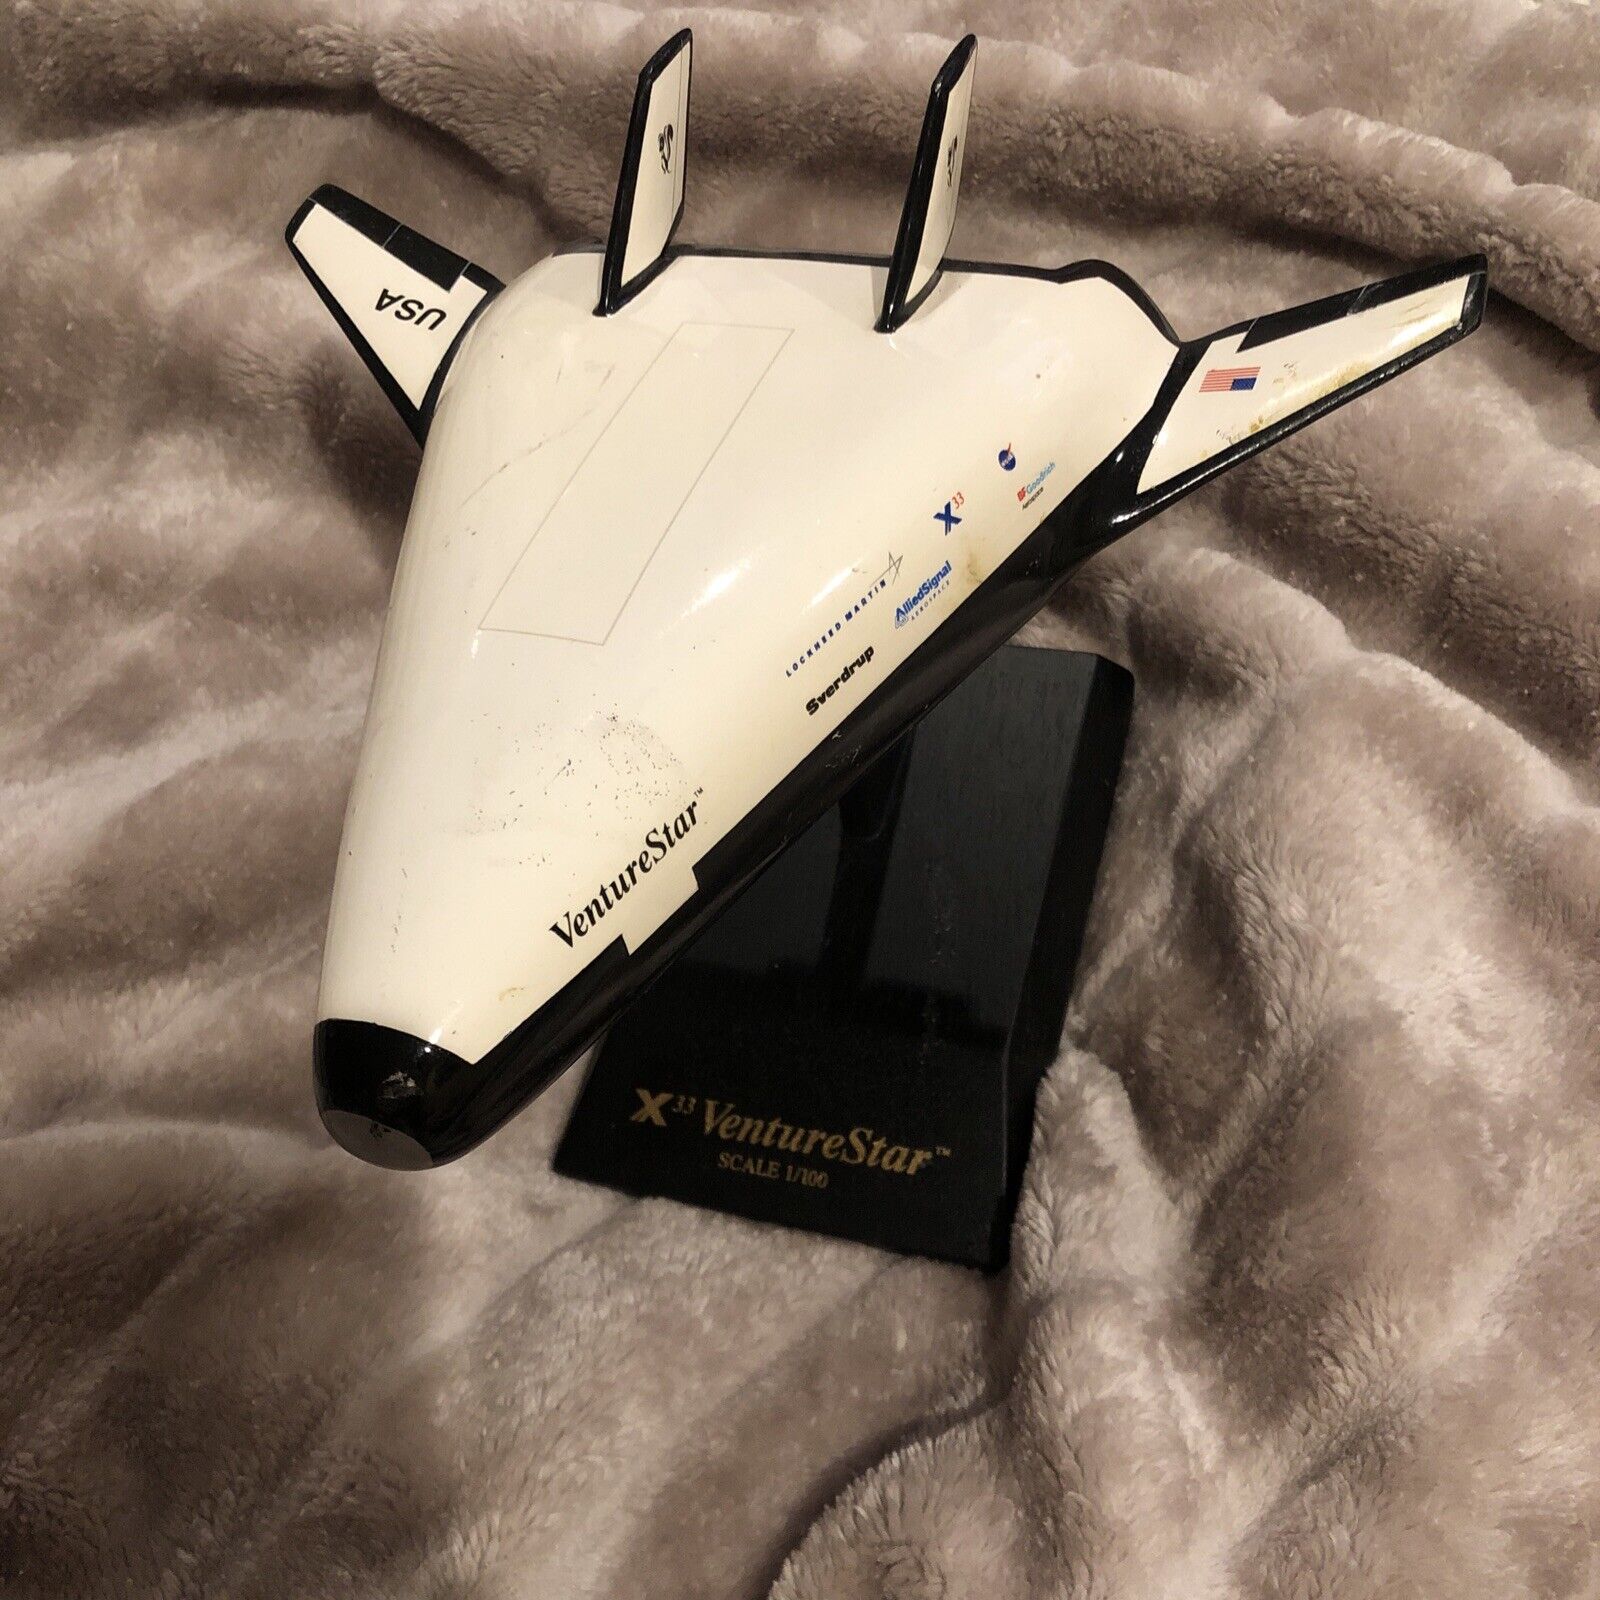 X-33 Venturestar Venture Star Airplane Desktop Model Plane Scale 1/100 Lockheed